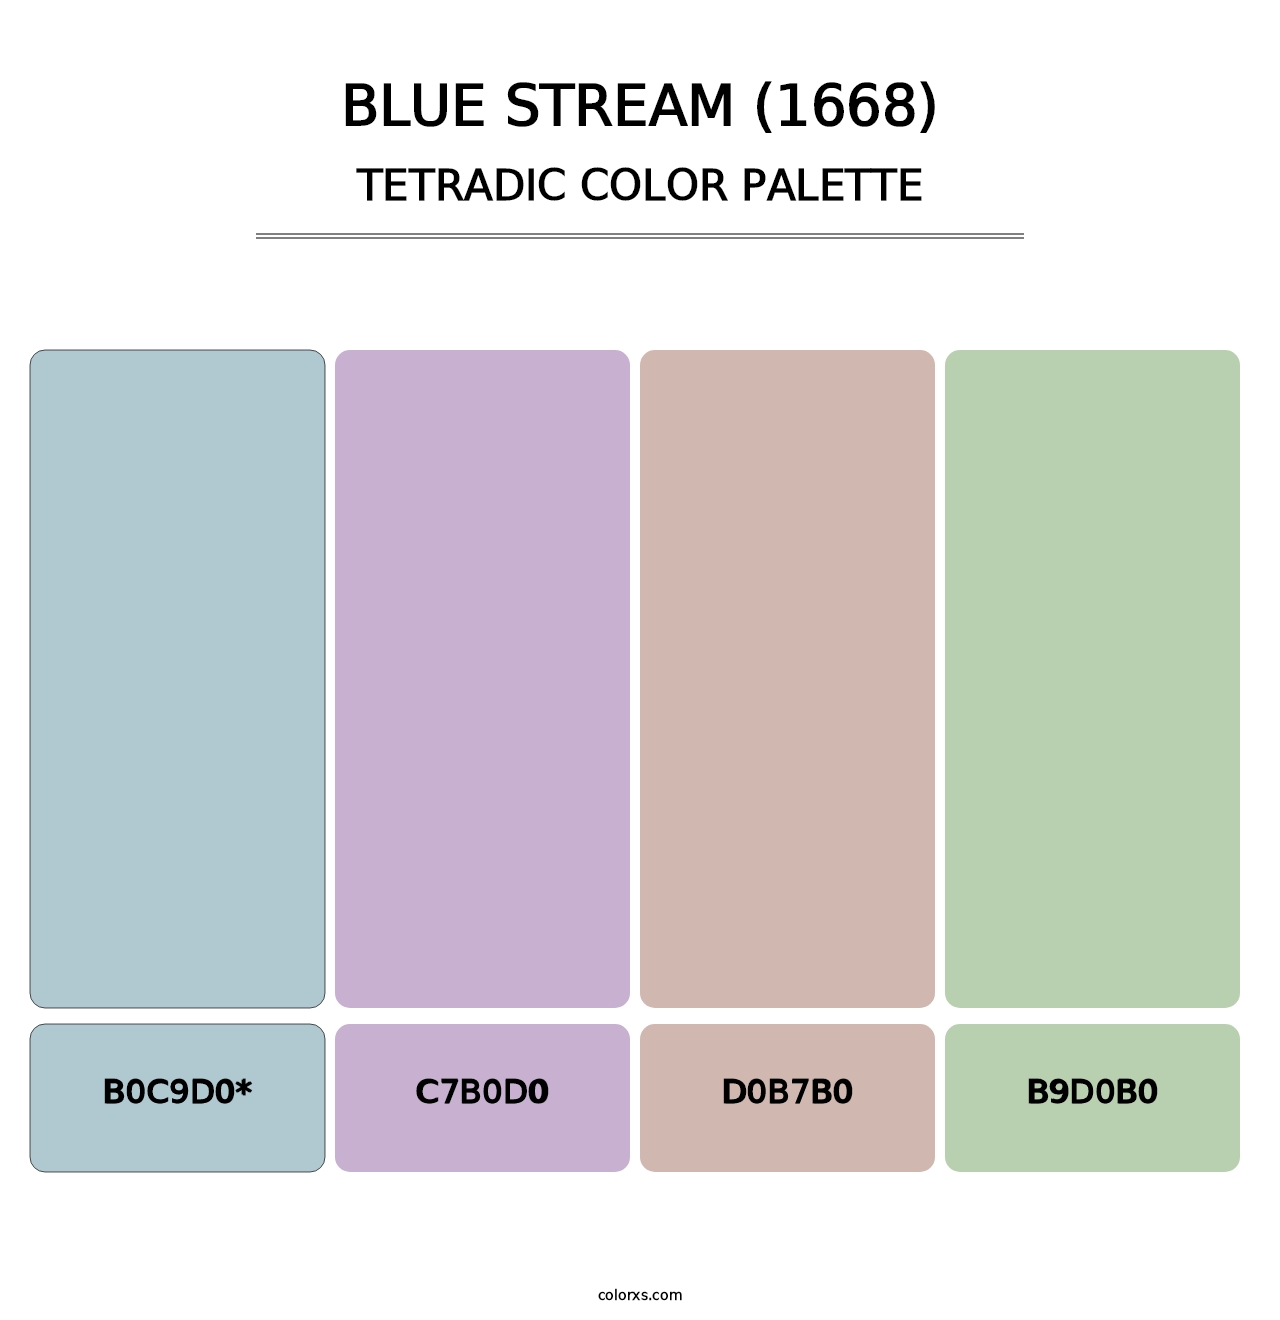 Blue Stream (1668) - Tetradic Color Palette